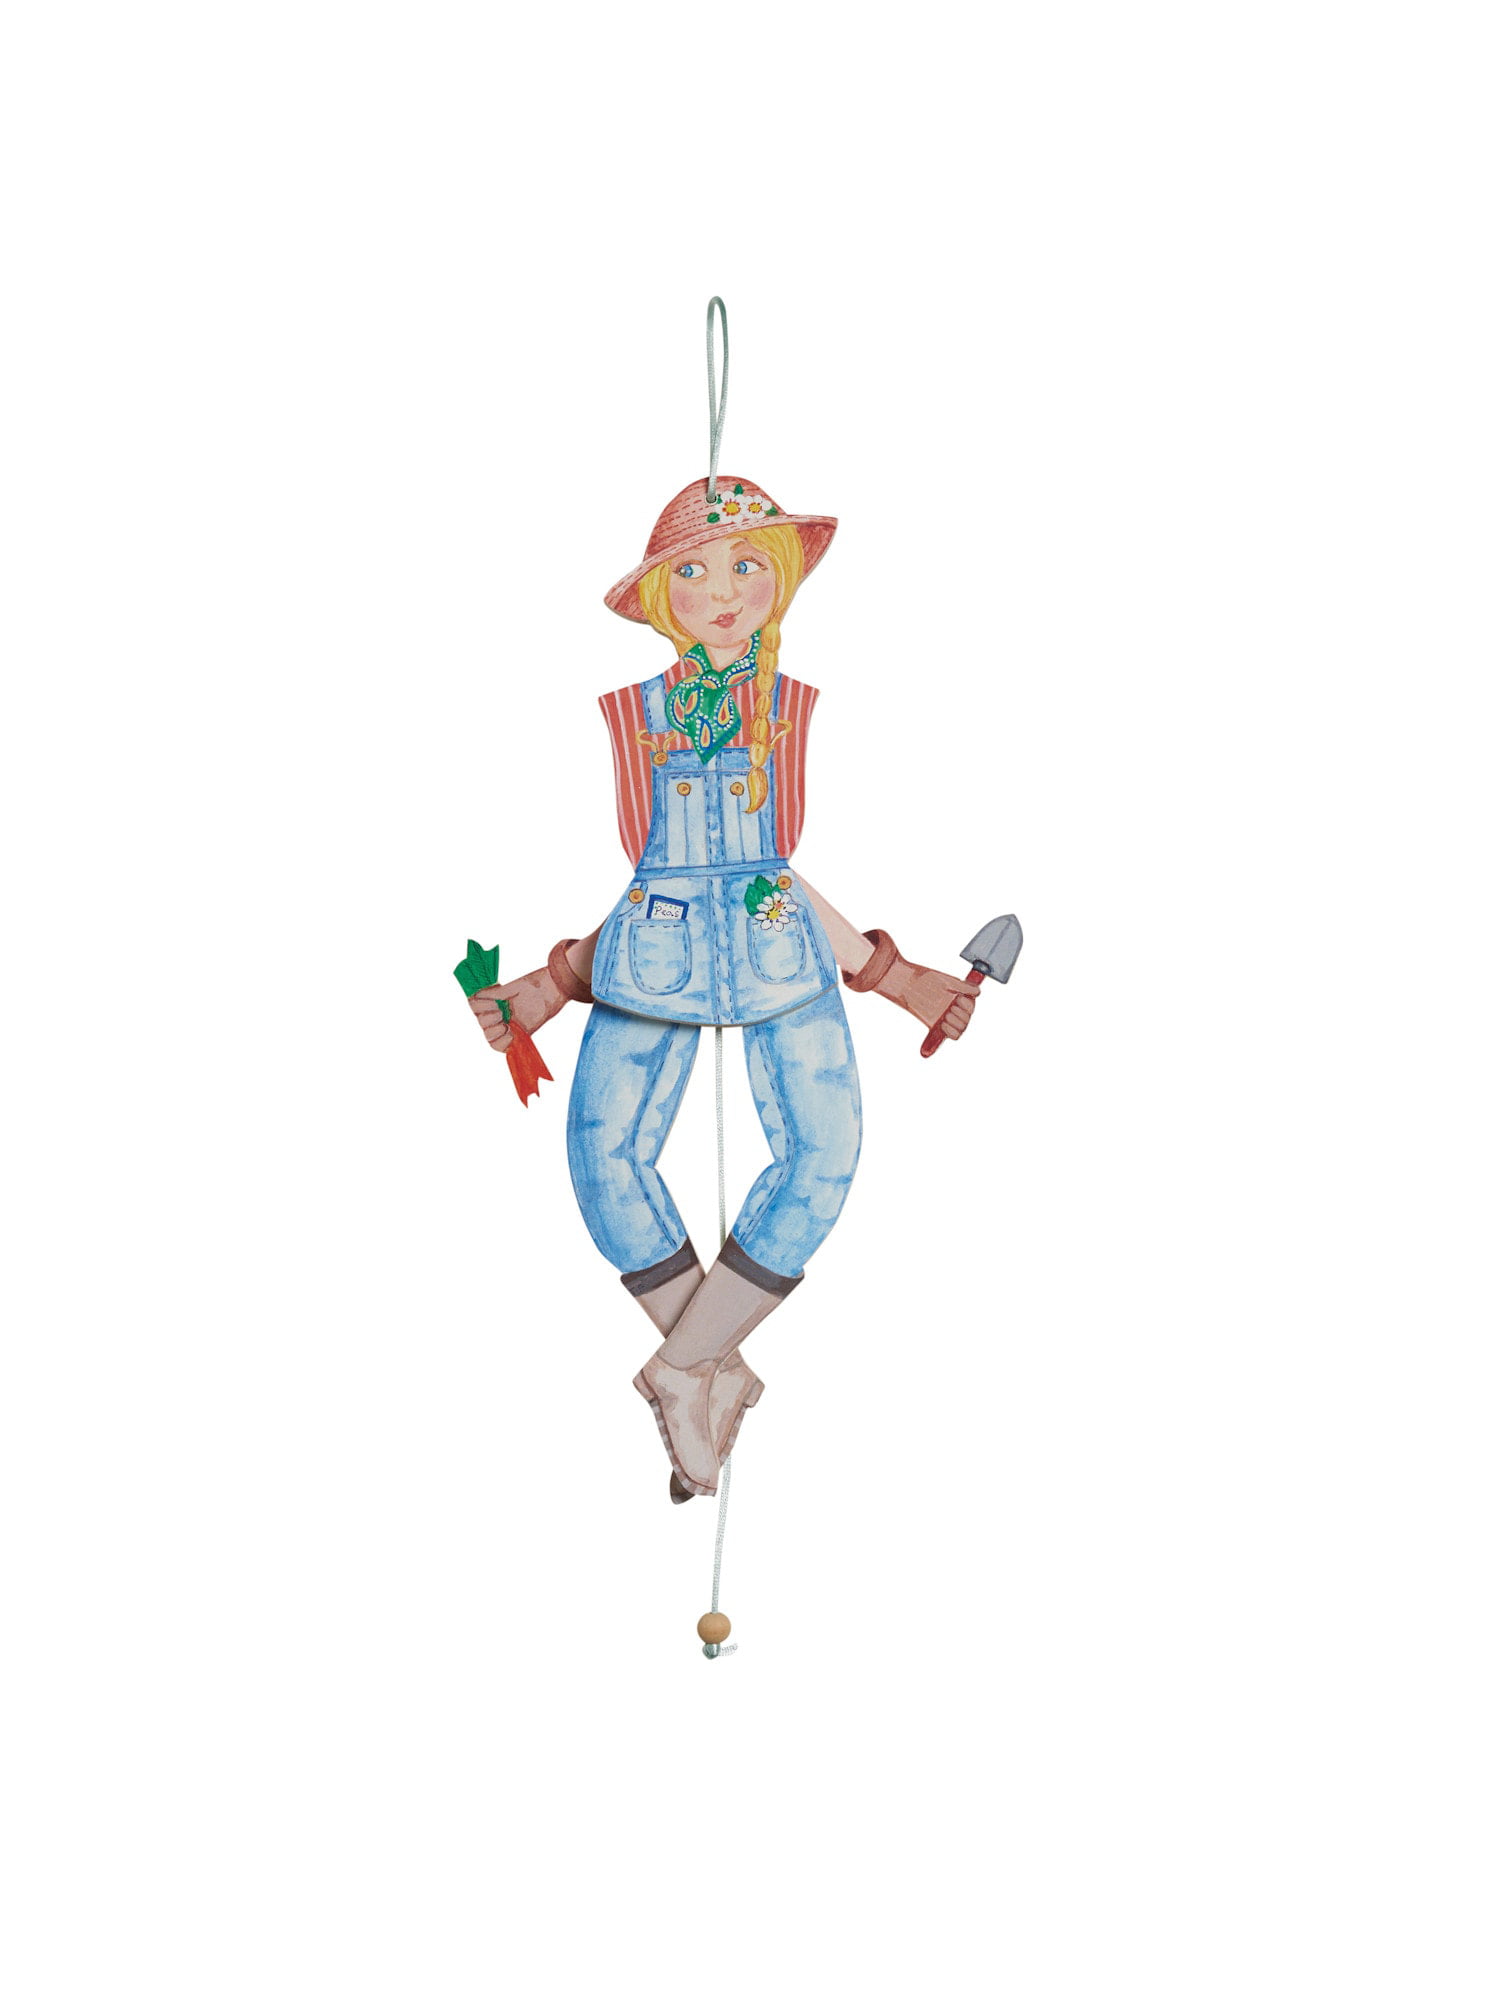 Jumping Jack Gardener Wall Art Marionette Ornament Pull String Toy 